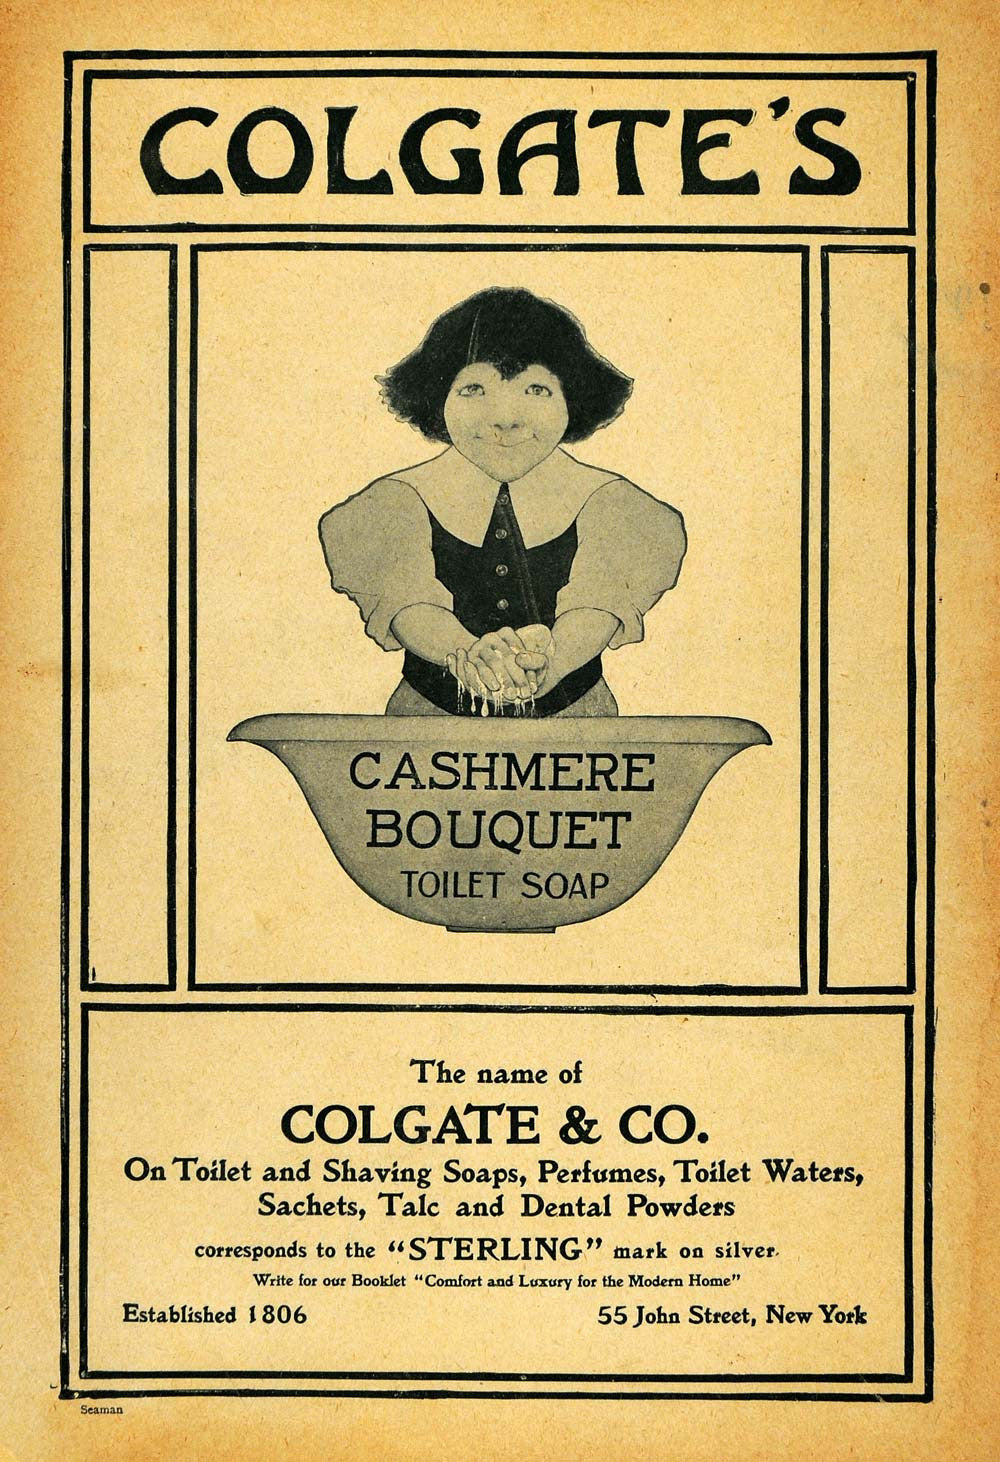 1904 Ad Cashmere Bouquet Toilet Soap Colgate & Company - ORIGINAL TOM1 - Period Paper
